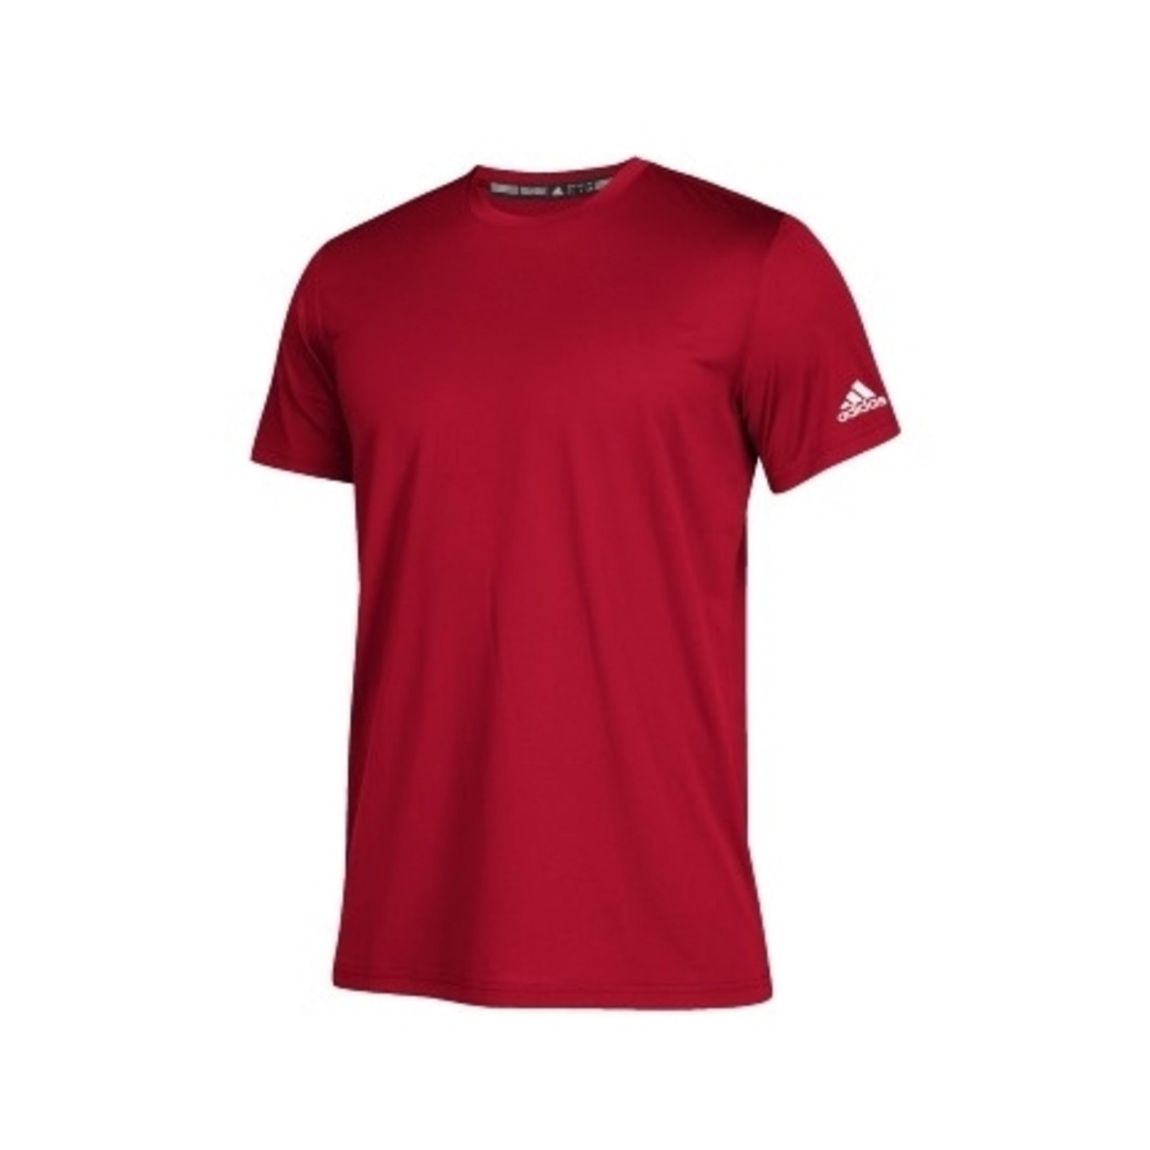 Adidas Men's Clima Tech T-Shirt